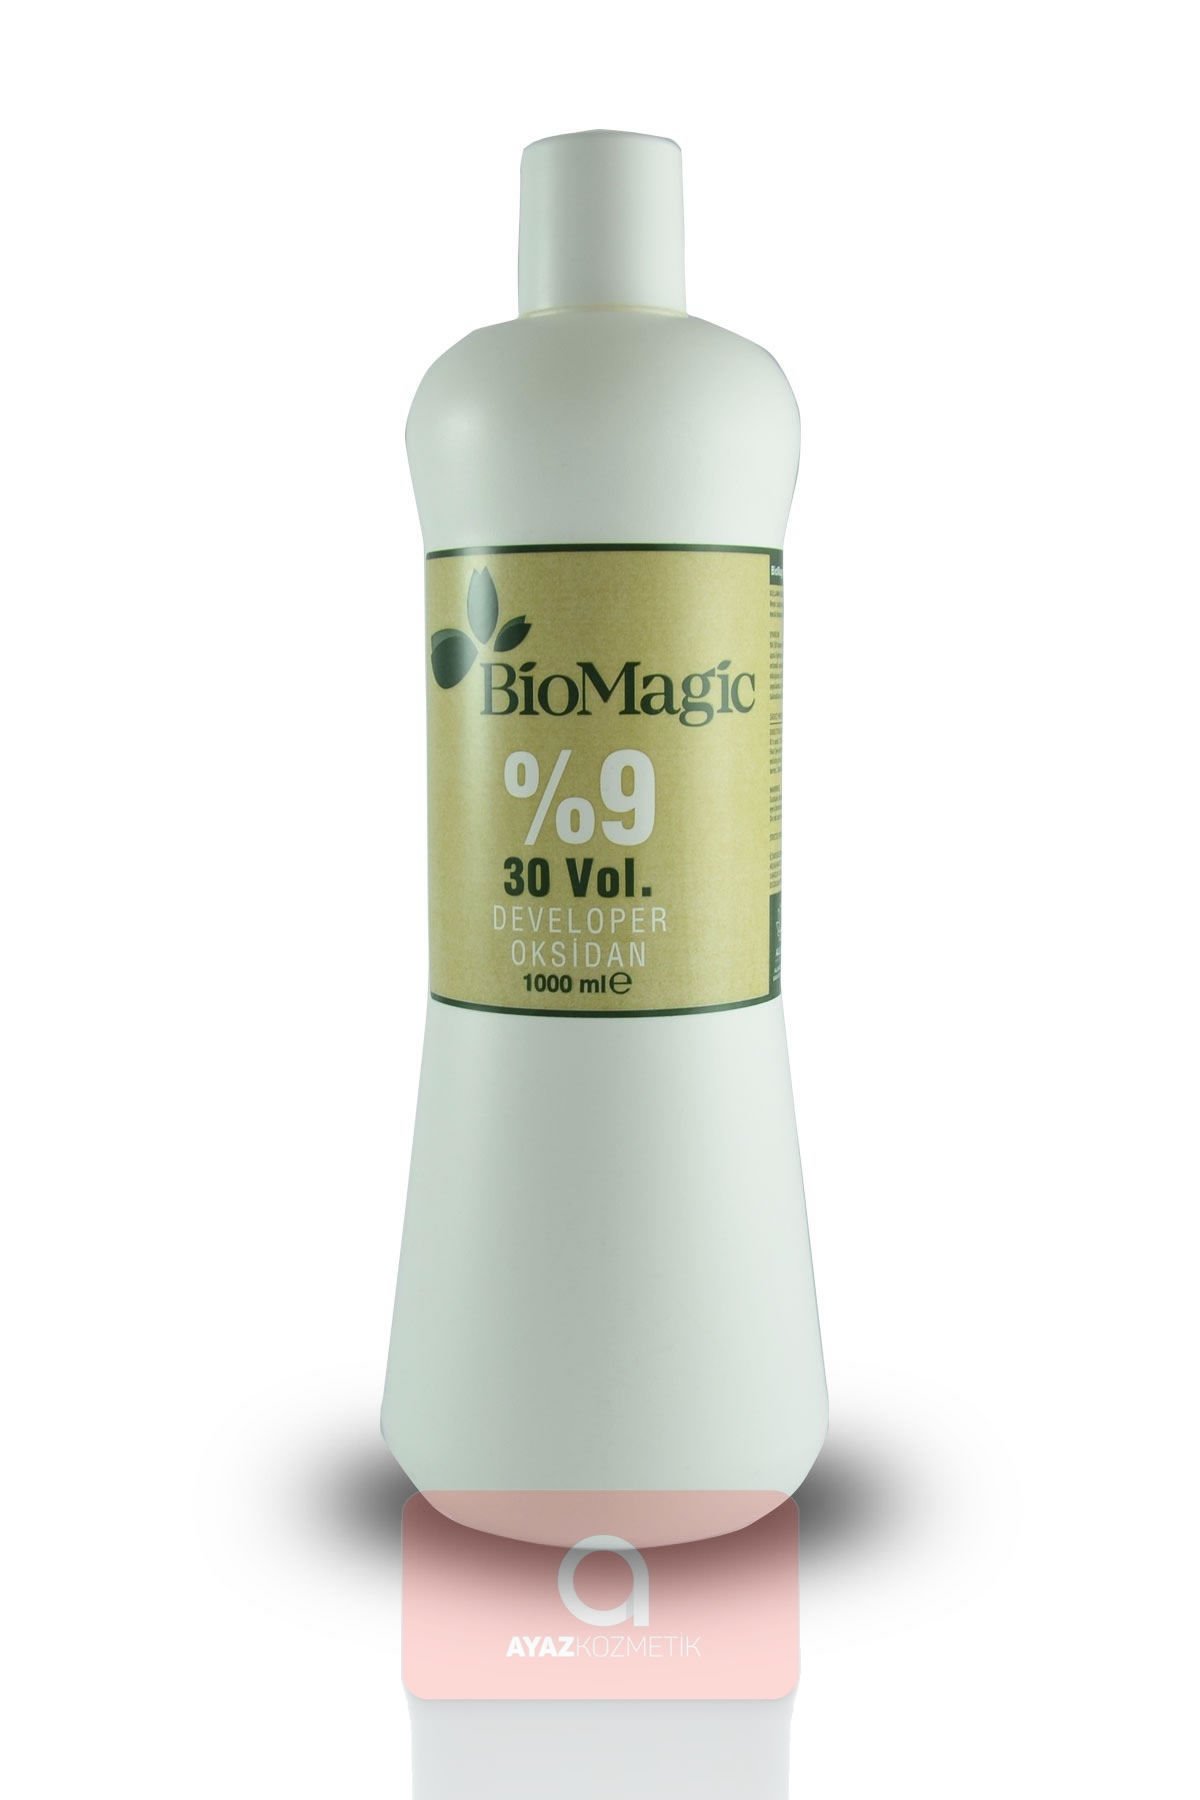 Biomagic Developer Oksidan 1000 Ml. - %9 30 Volume